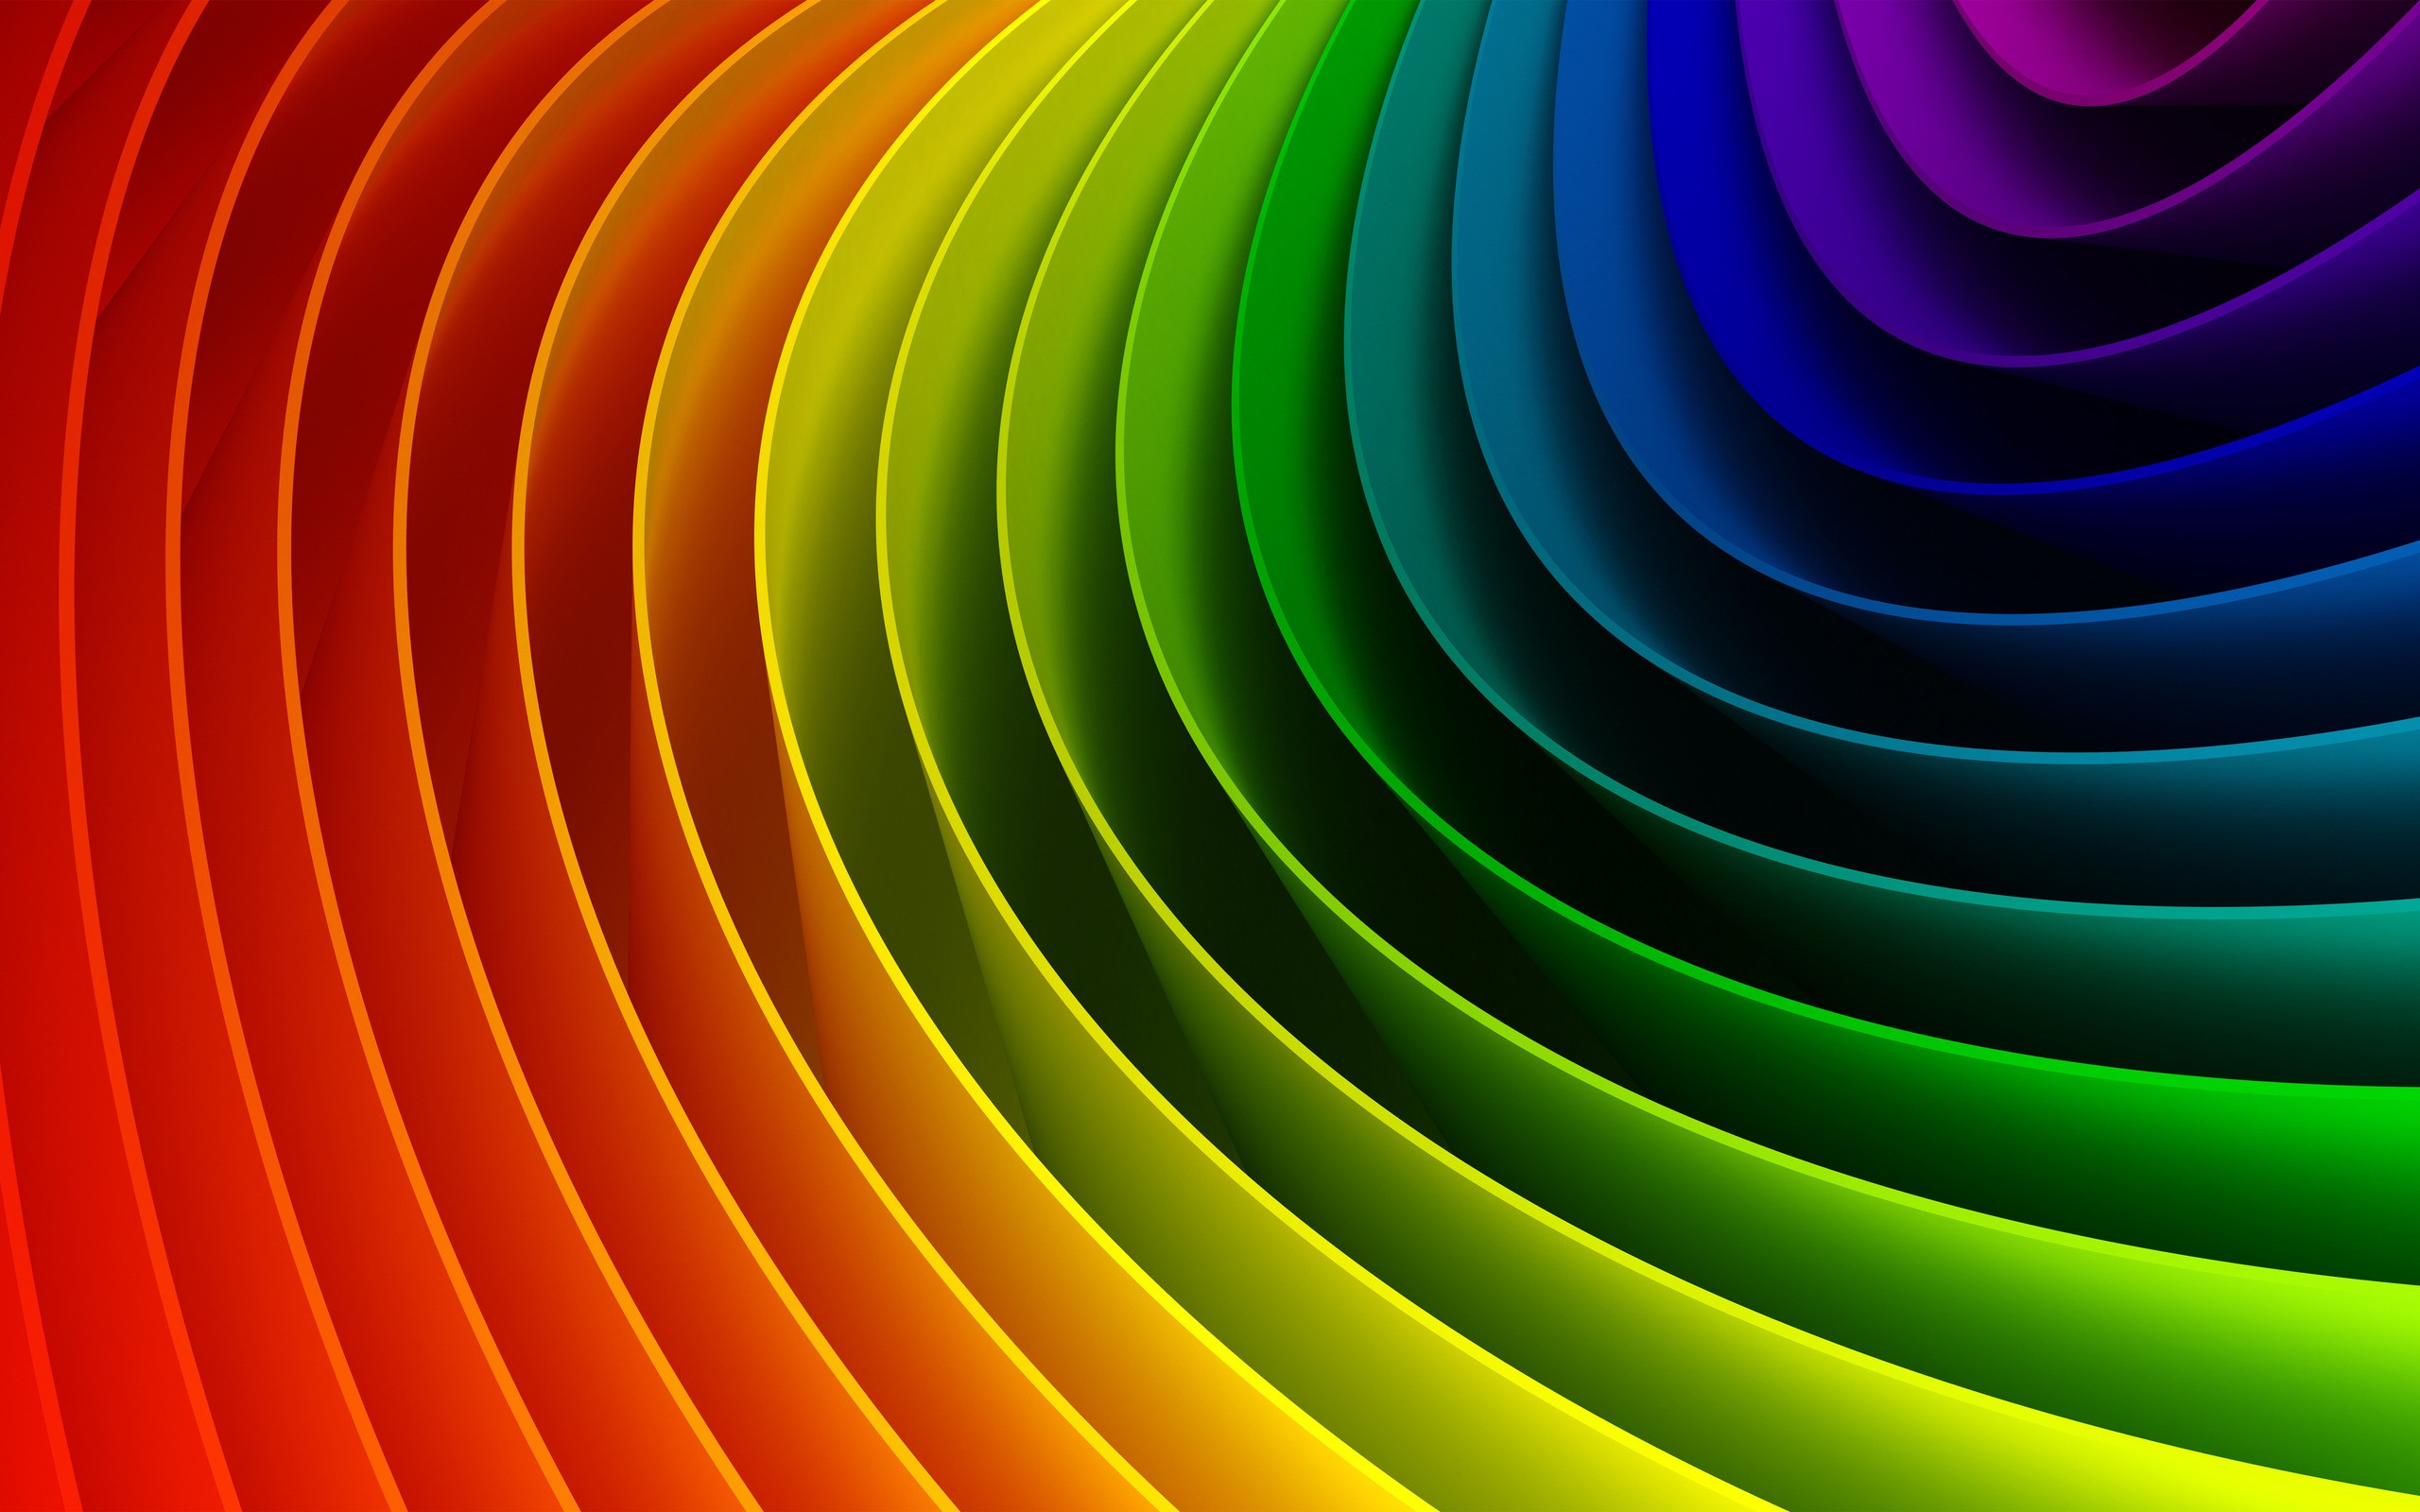 ŚLICZNE PULPITY - abstract_colorful_3d_desktop_2560x1600_wallpaper-1028615.jpg